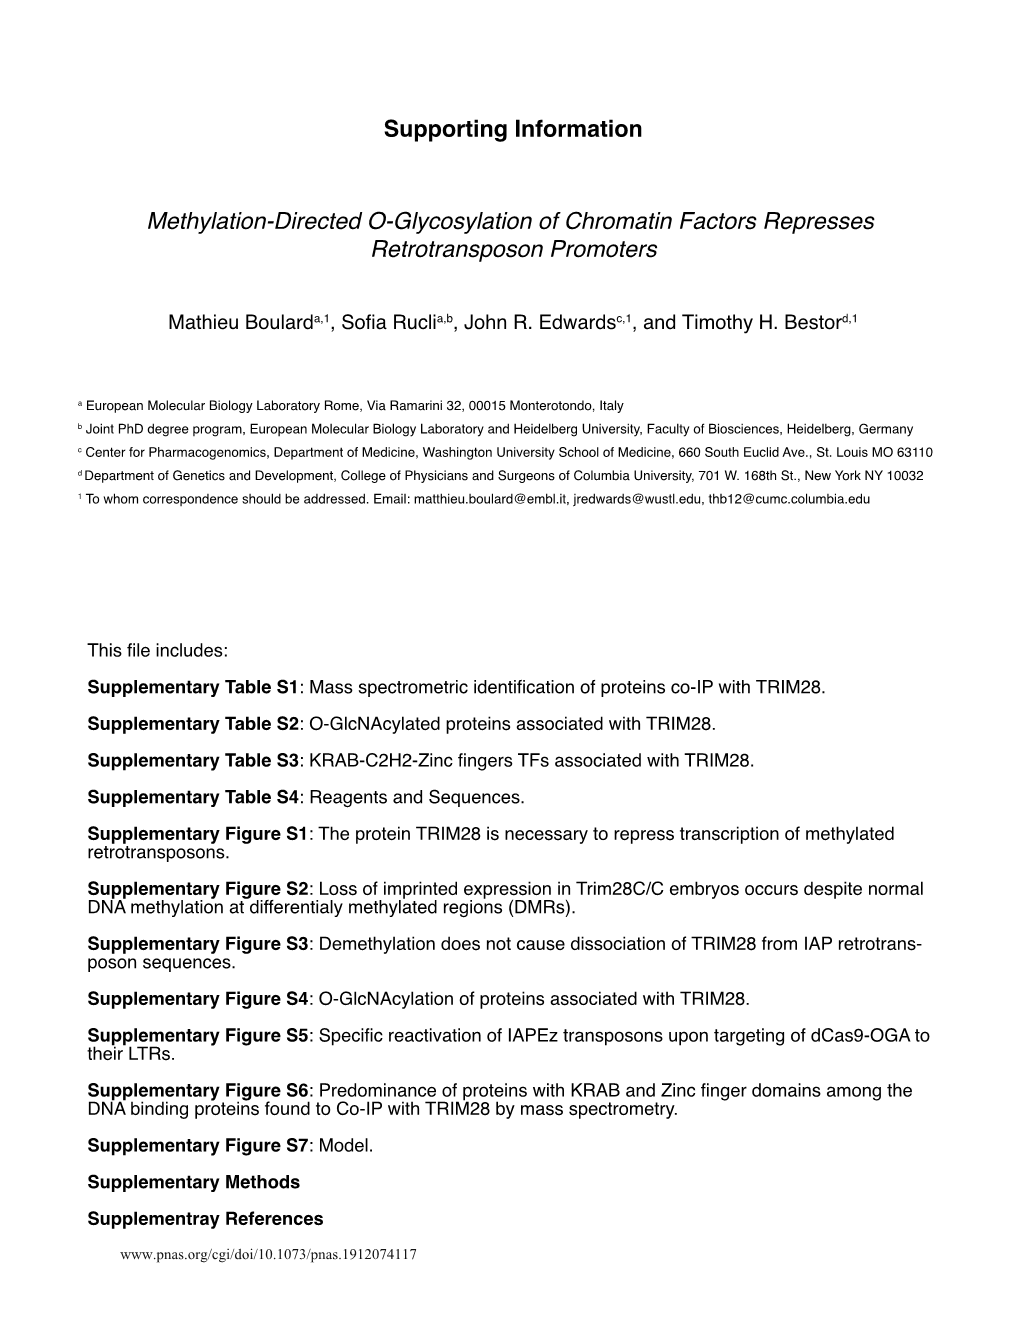 Methylation-Directed O-Glycosylation of Chromatin Factors Represses Retrotransposon Promoters